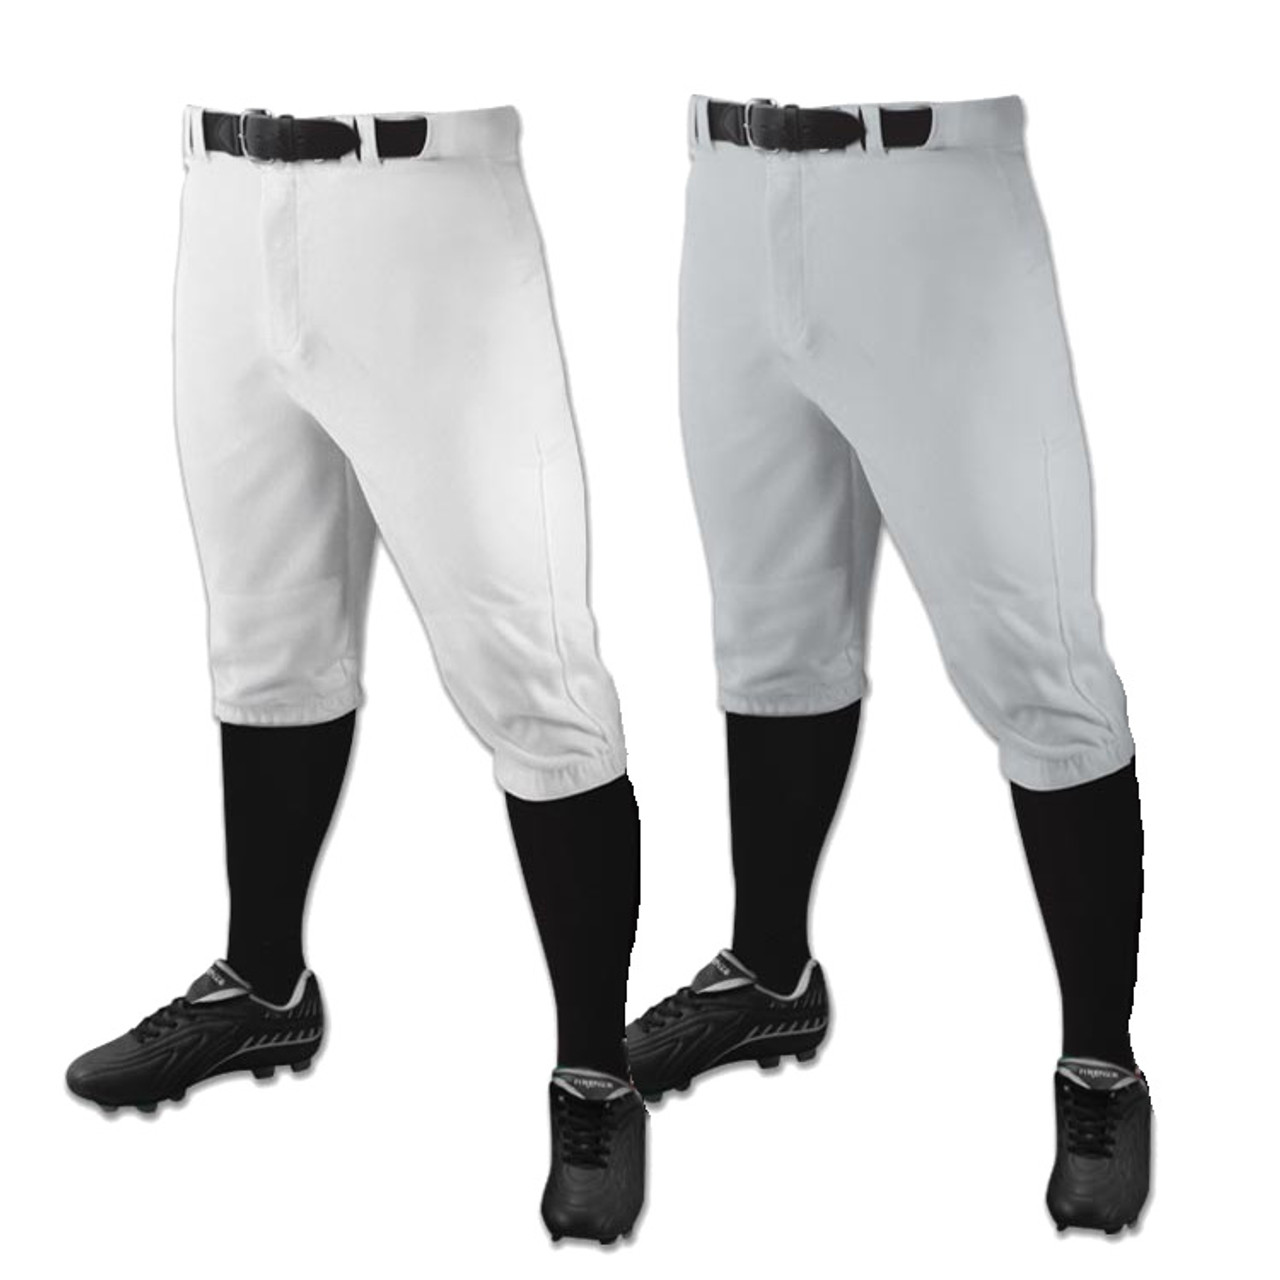 Mizuno Premier Short Pant 350280 Adult Baseball Pants - Black Large